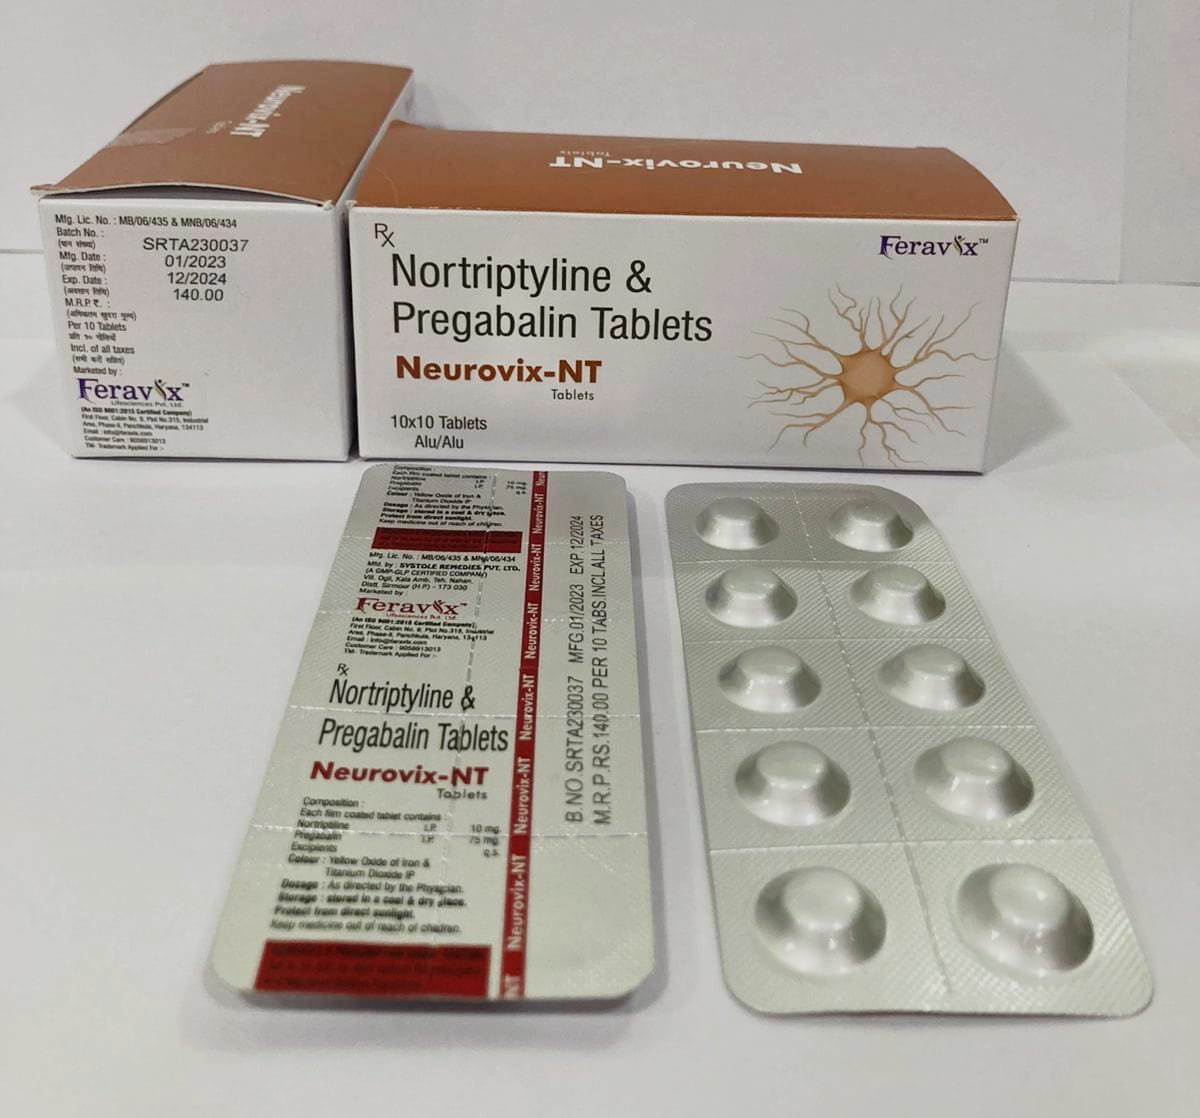 Product Name: NEUROVIX NT Tablets, Compositions of NEUROVIX NT Tablets are NORTRIPTYLINE 10MG, PREGABALIN 75MG - Feravix Lifesciences